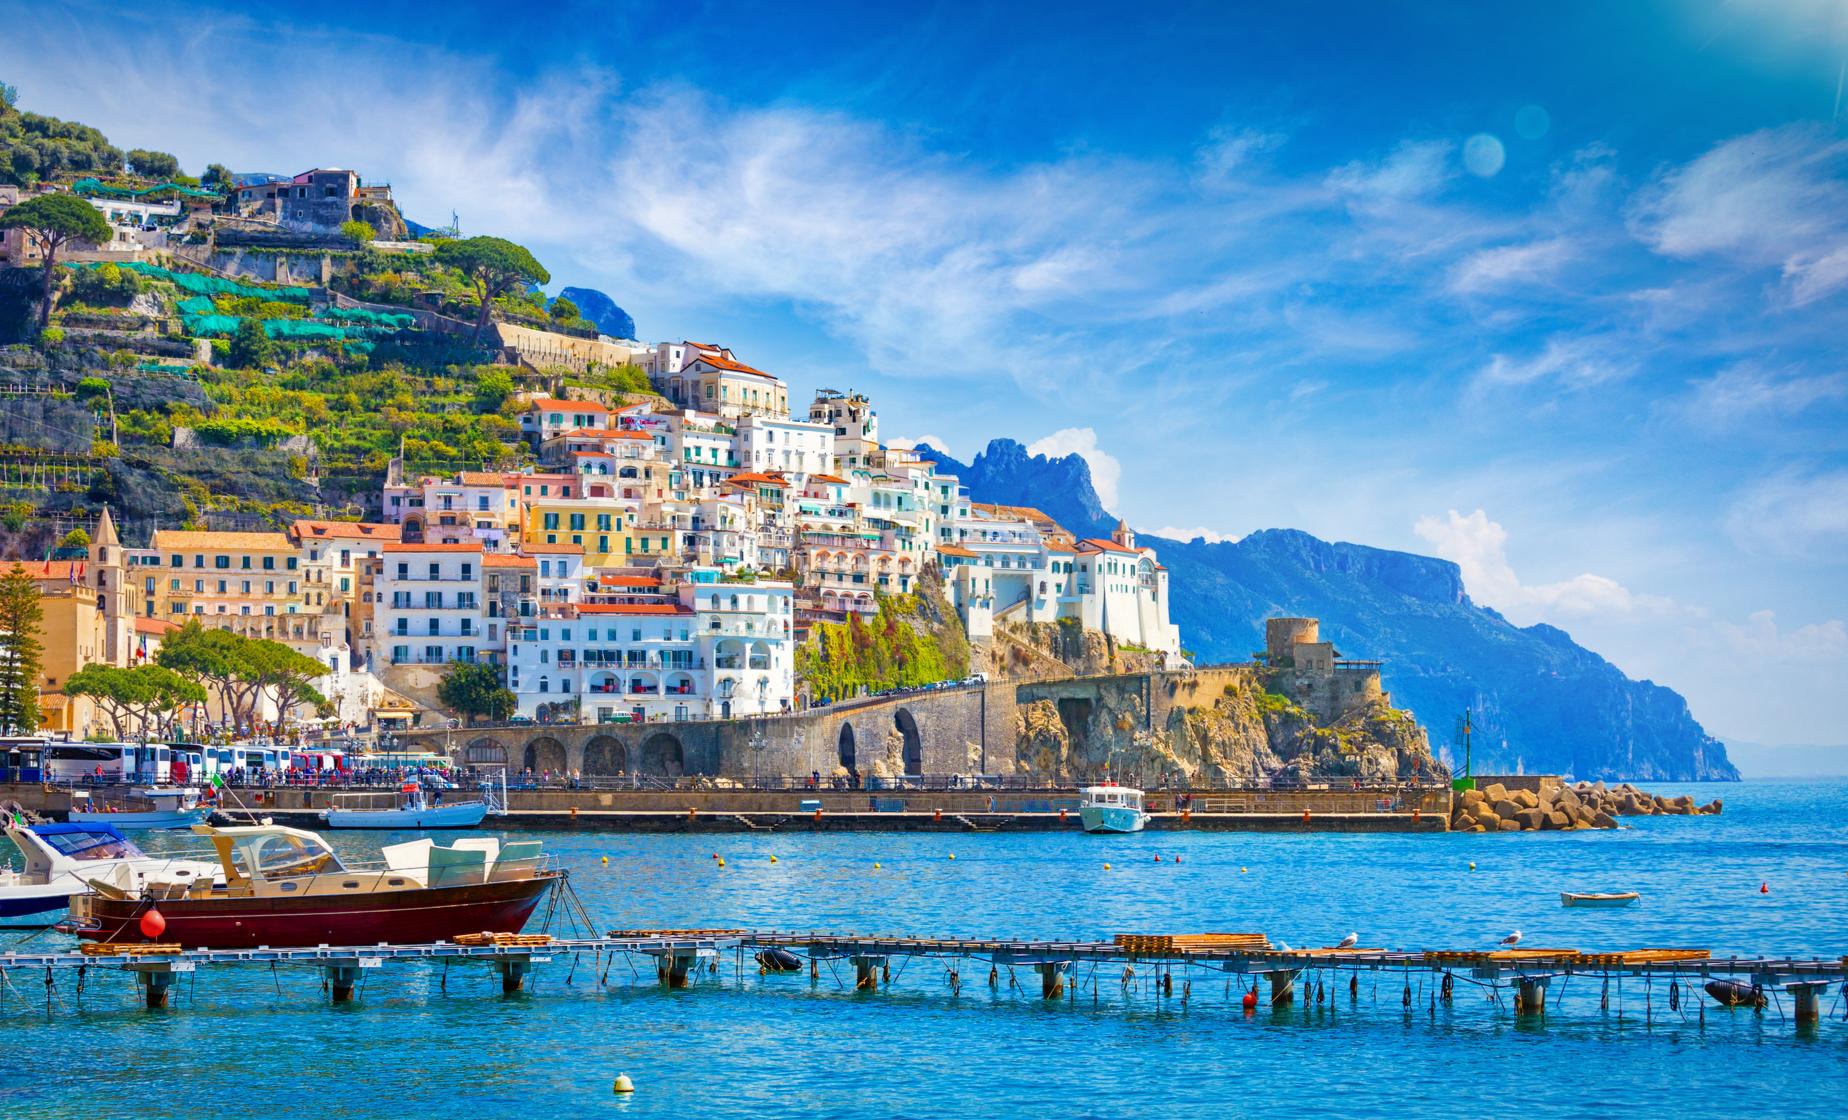 Sorrento, Positano and Amalfi by Land and Sea | Naples Shore Excursion ...